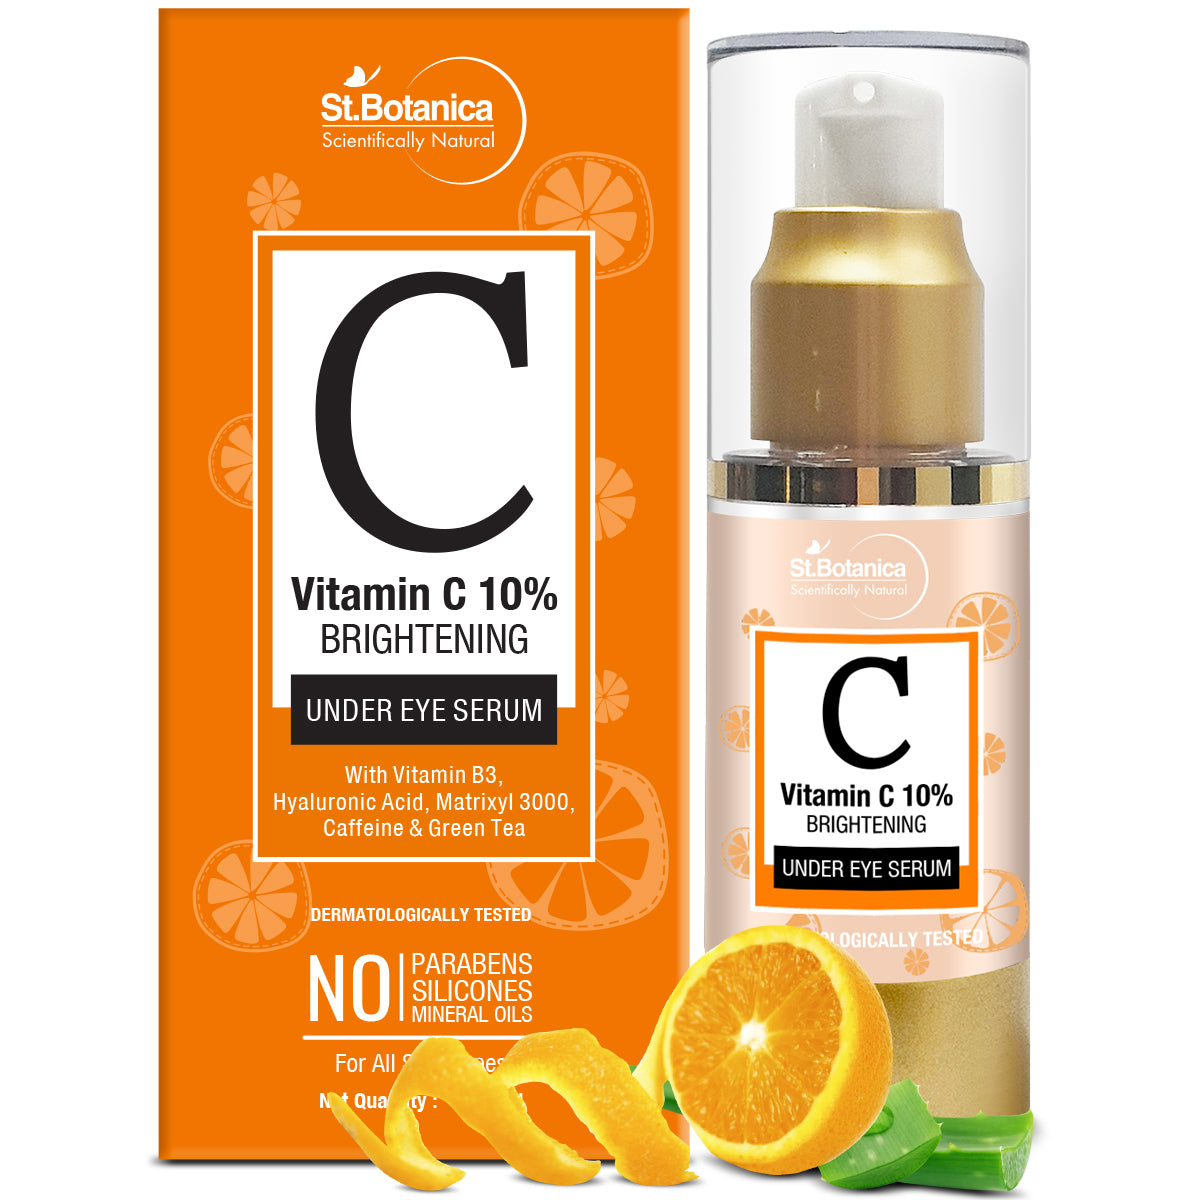 St.Botanica Vitamin C 10% Brightening Under Eye Serum, Face Serum With Vitamin C, E, B3, Hyaluronic Acid, Caffeine and Green Tea, 30 ml